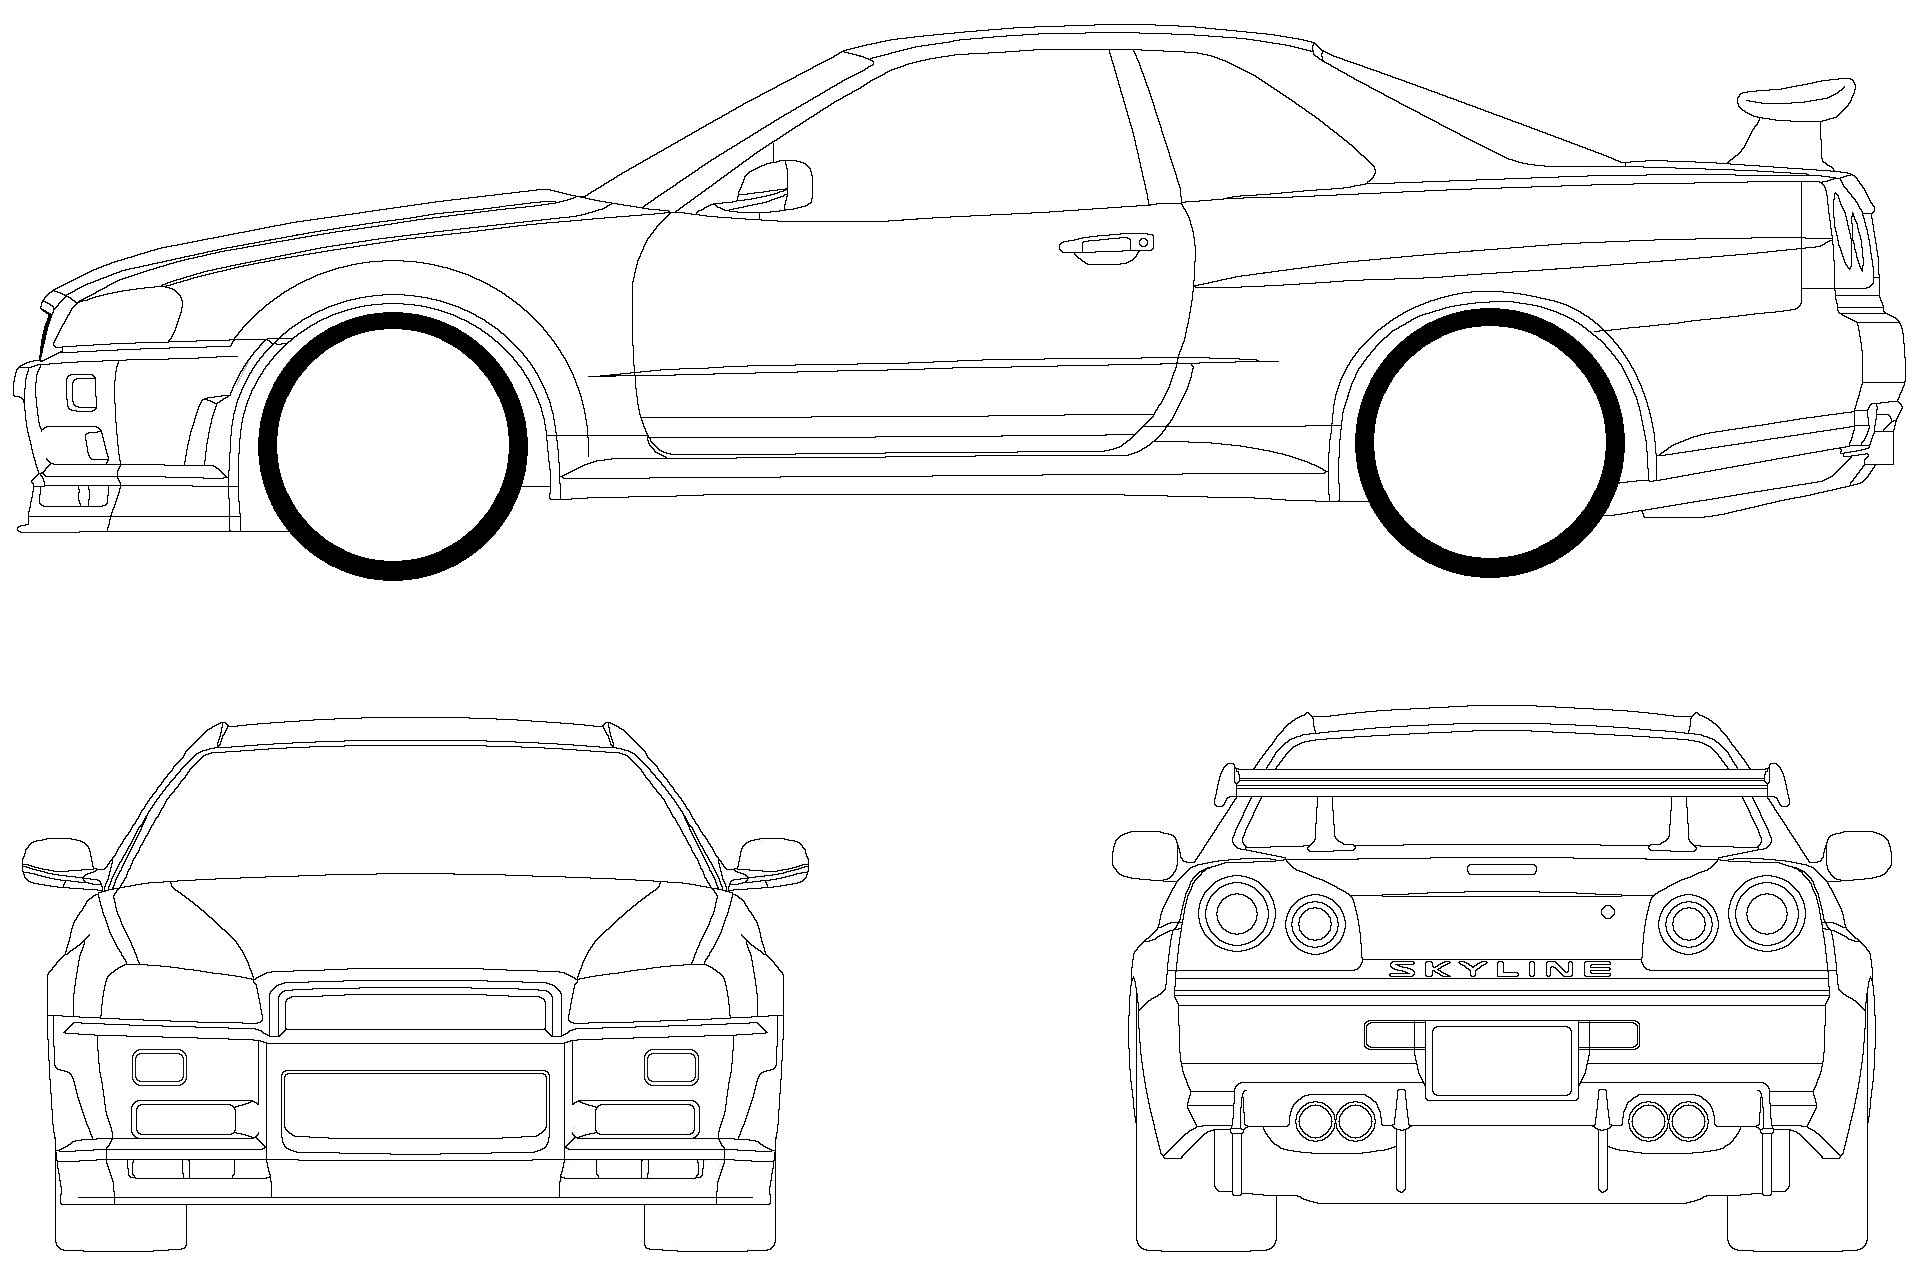 Nissan skyline r34 blueprints #4